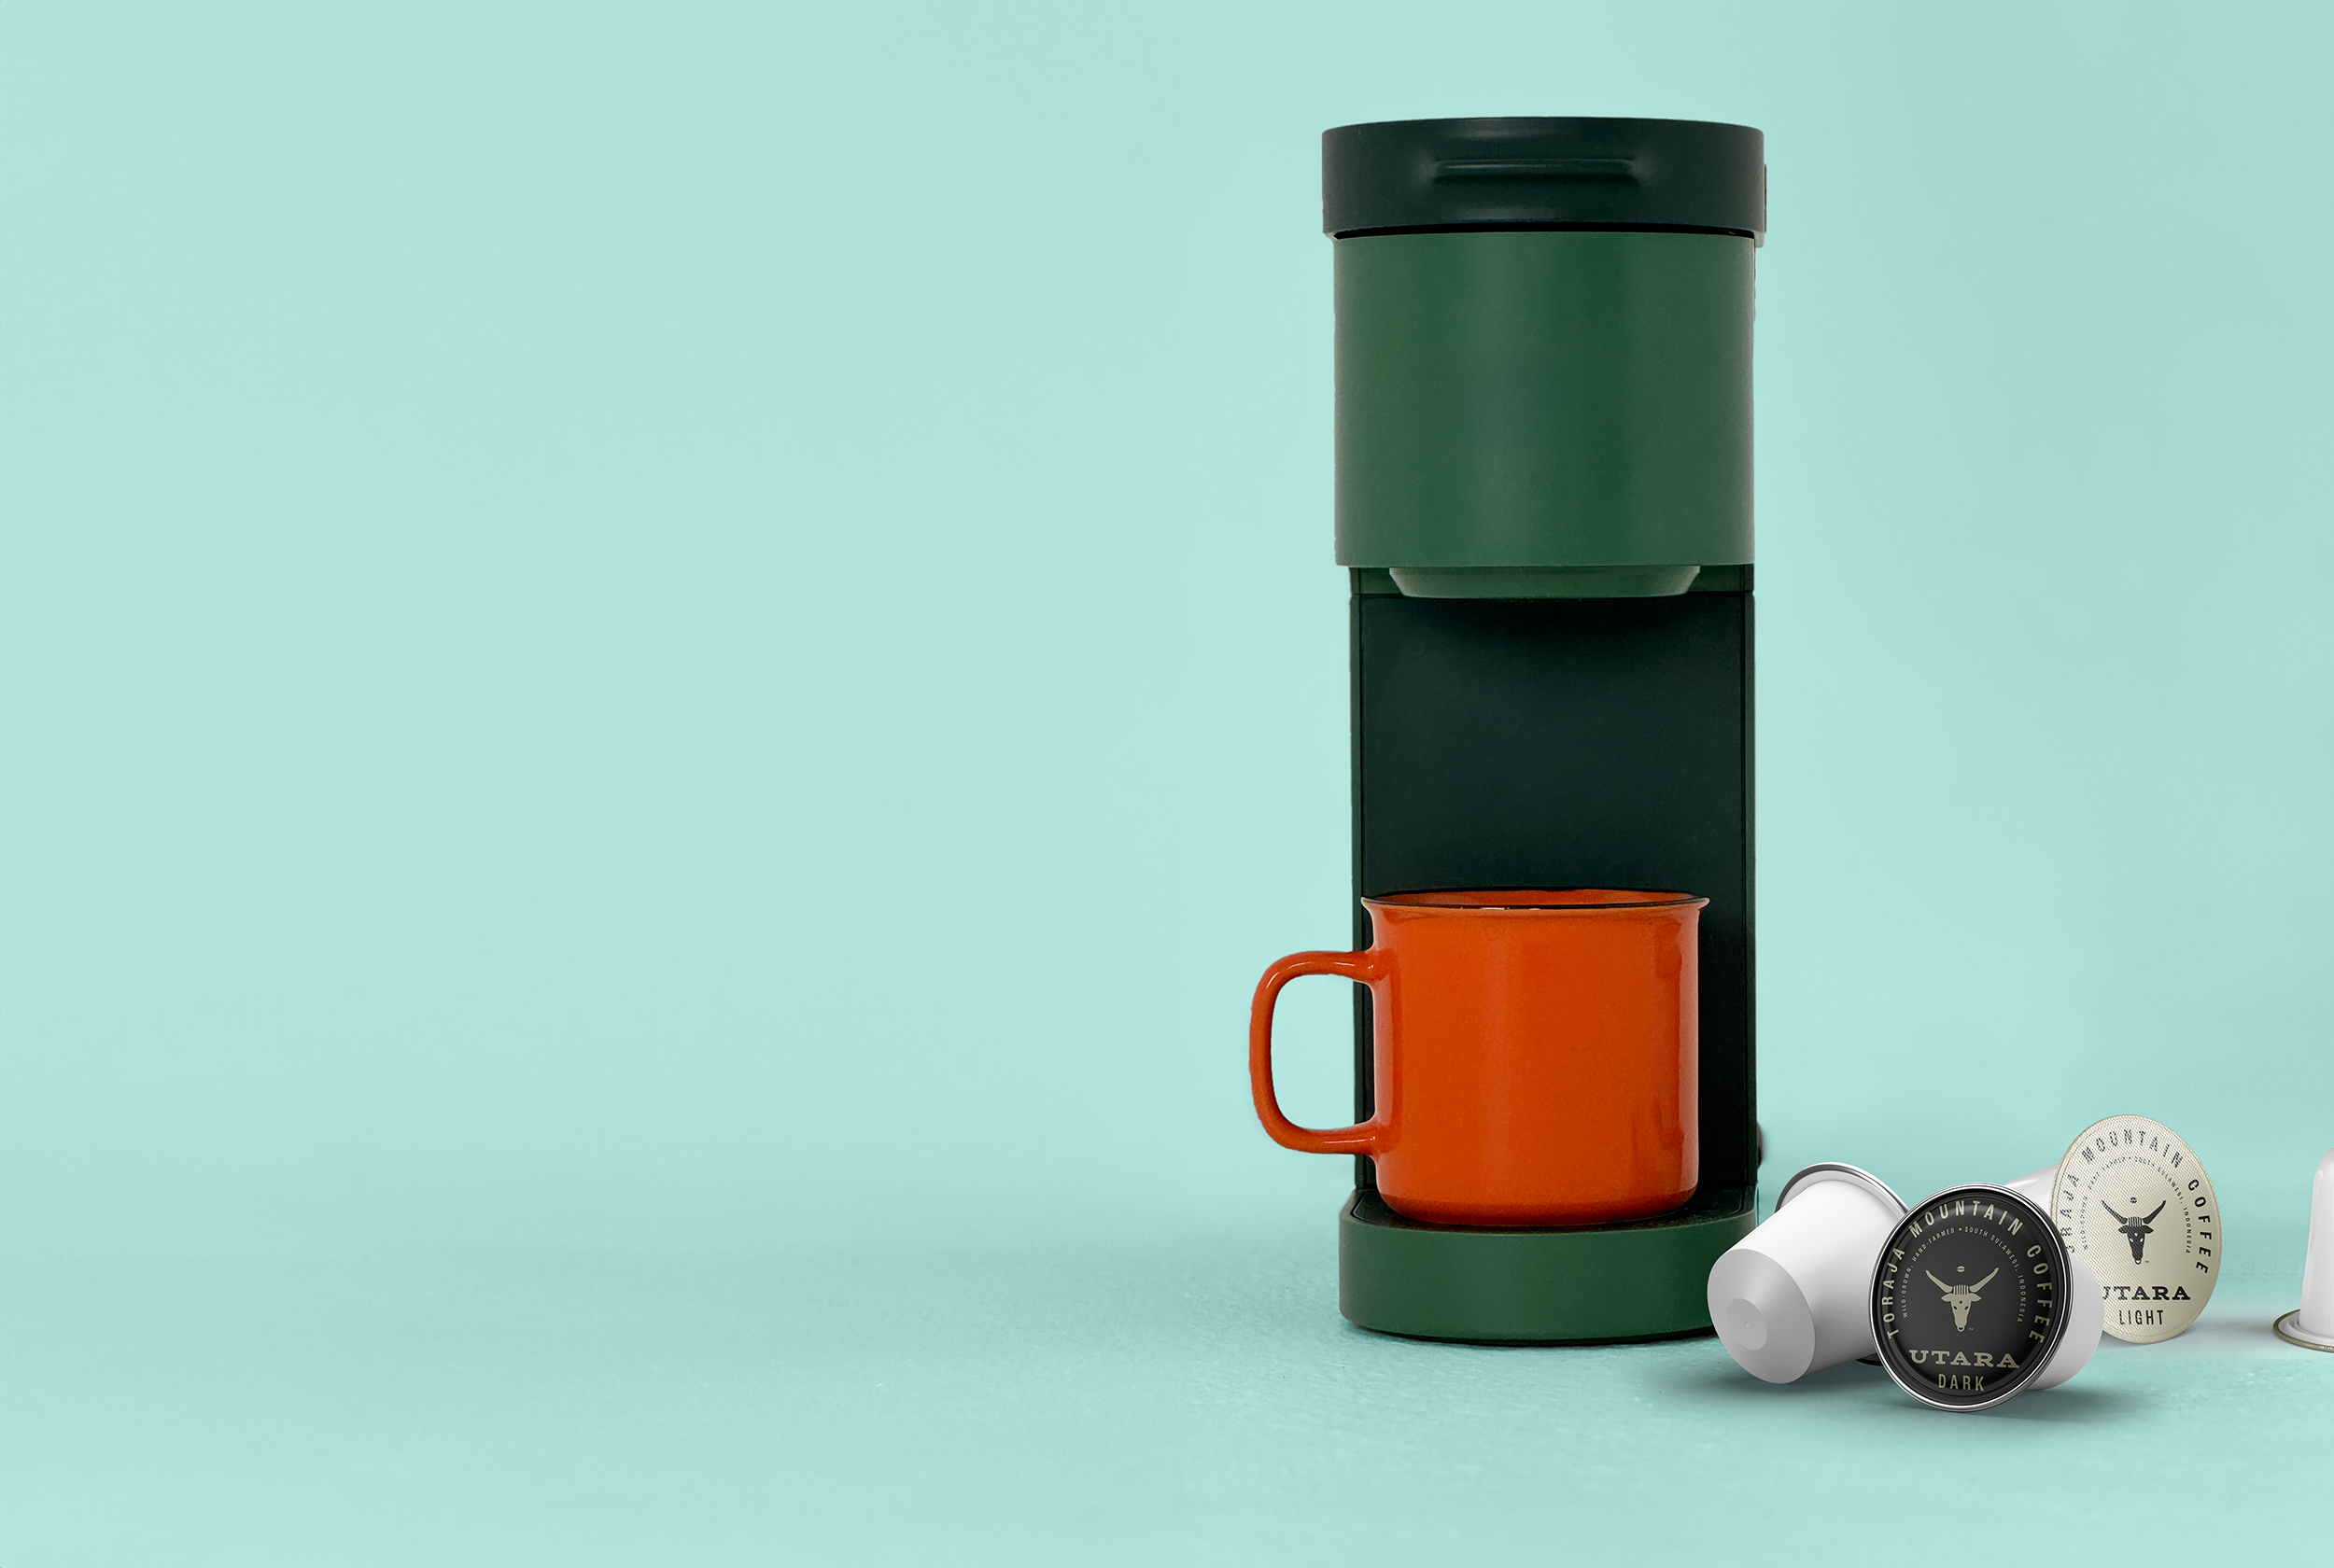 keurig machine with cup of coffee and toraja mountain coffee kcups